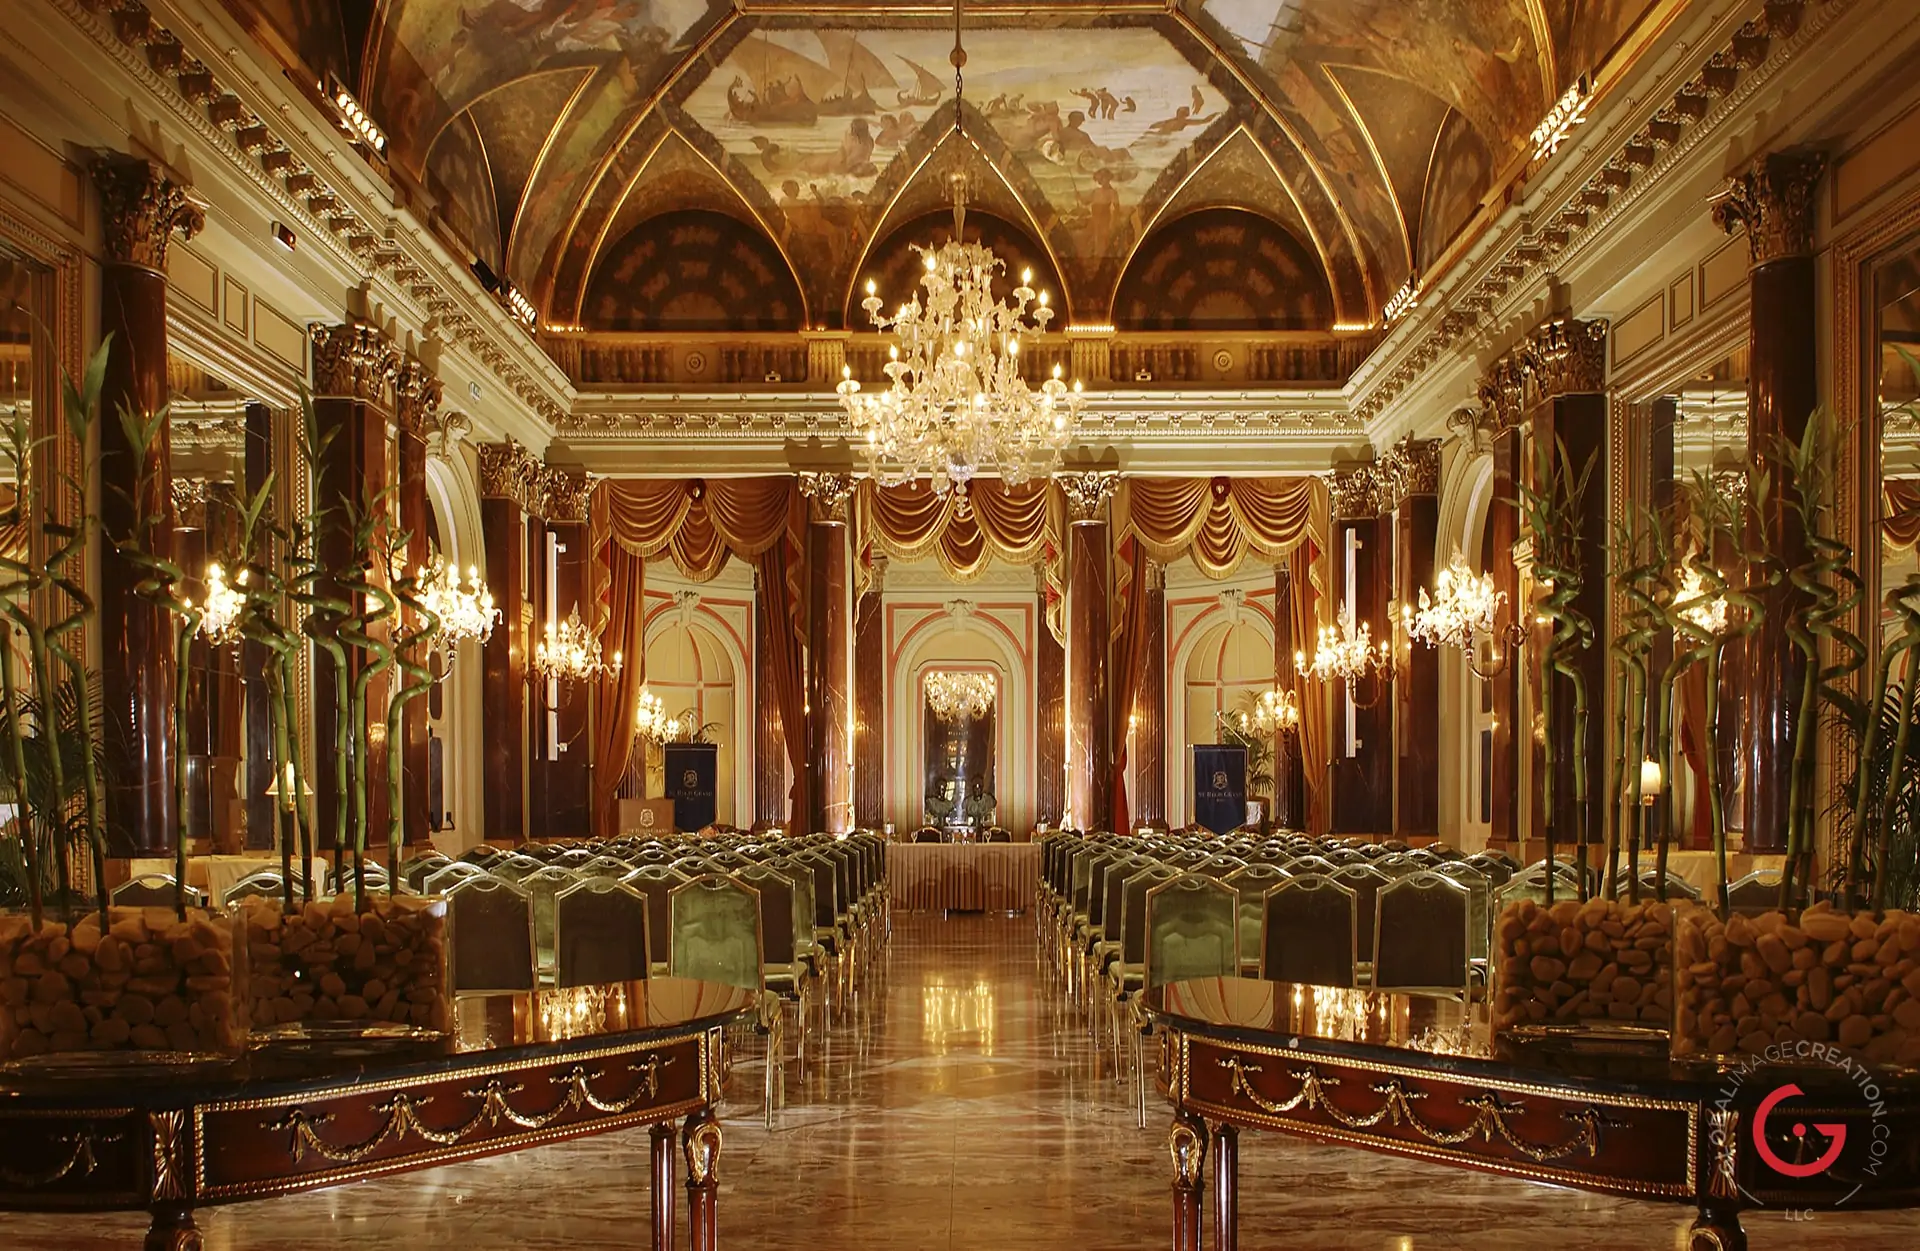 Hotel Photographers, Luxury Hotel Photography, Resort Photographer of Ritz Ballroom - St. Regis Rome, Italy